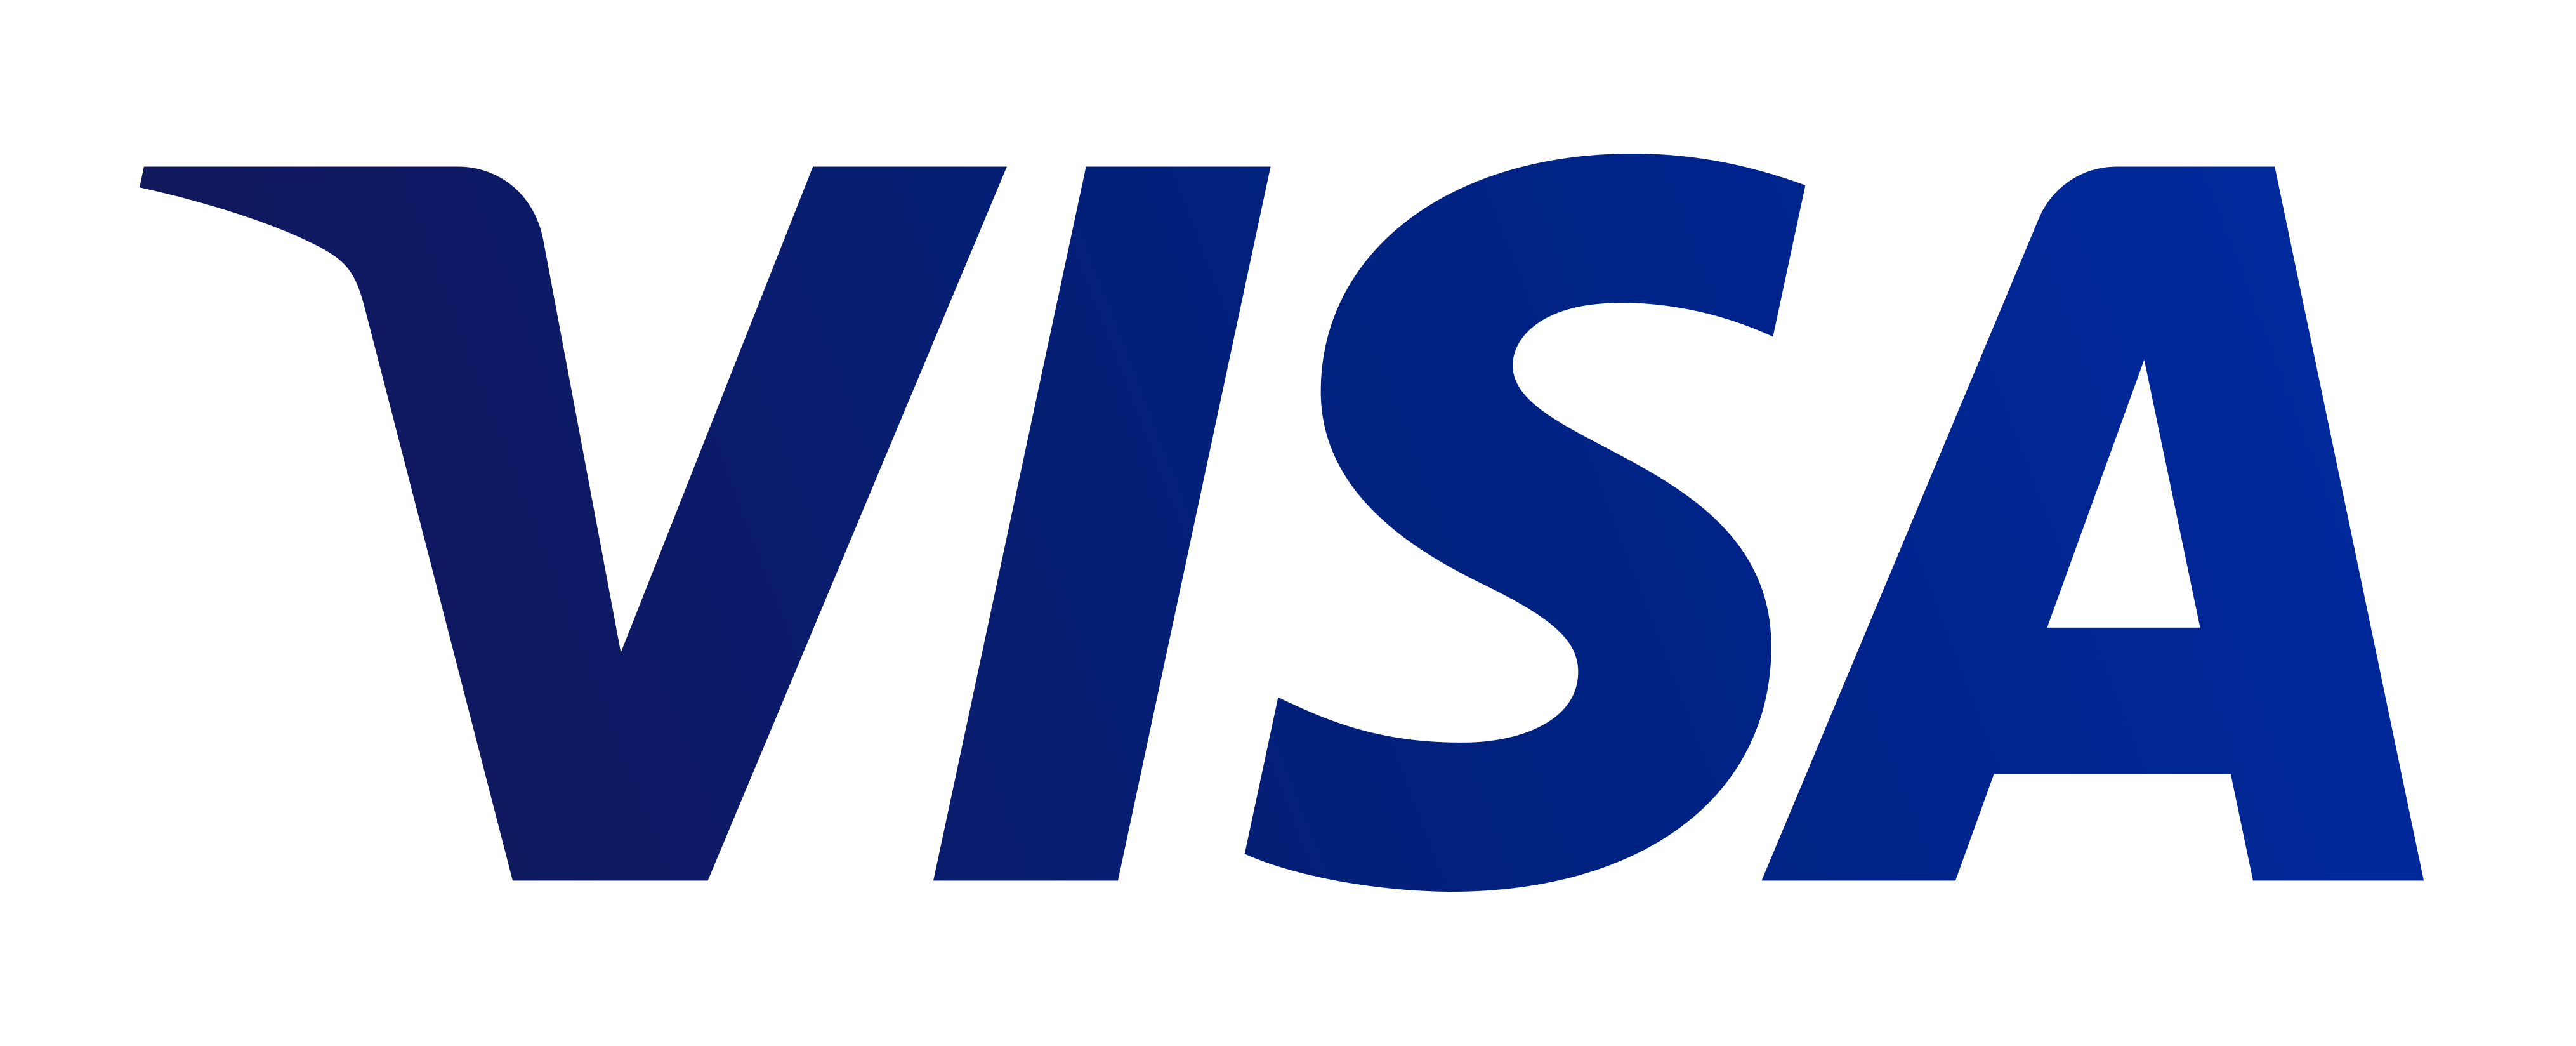 Visa Logo PNG Image - PurePNG | Free transparent CC0 PNG Image Library